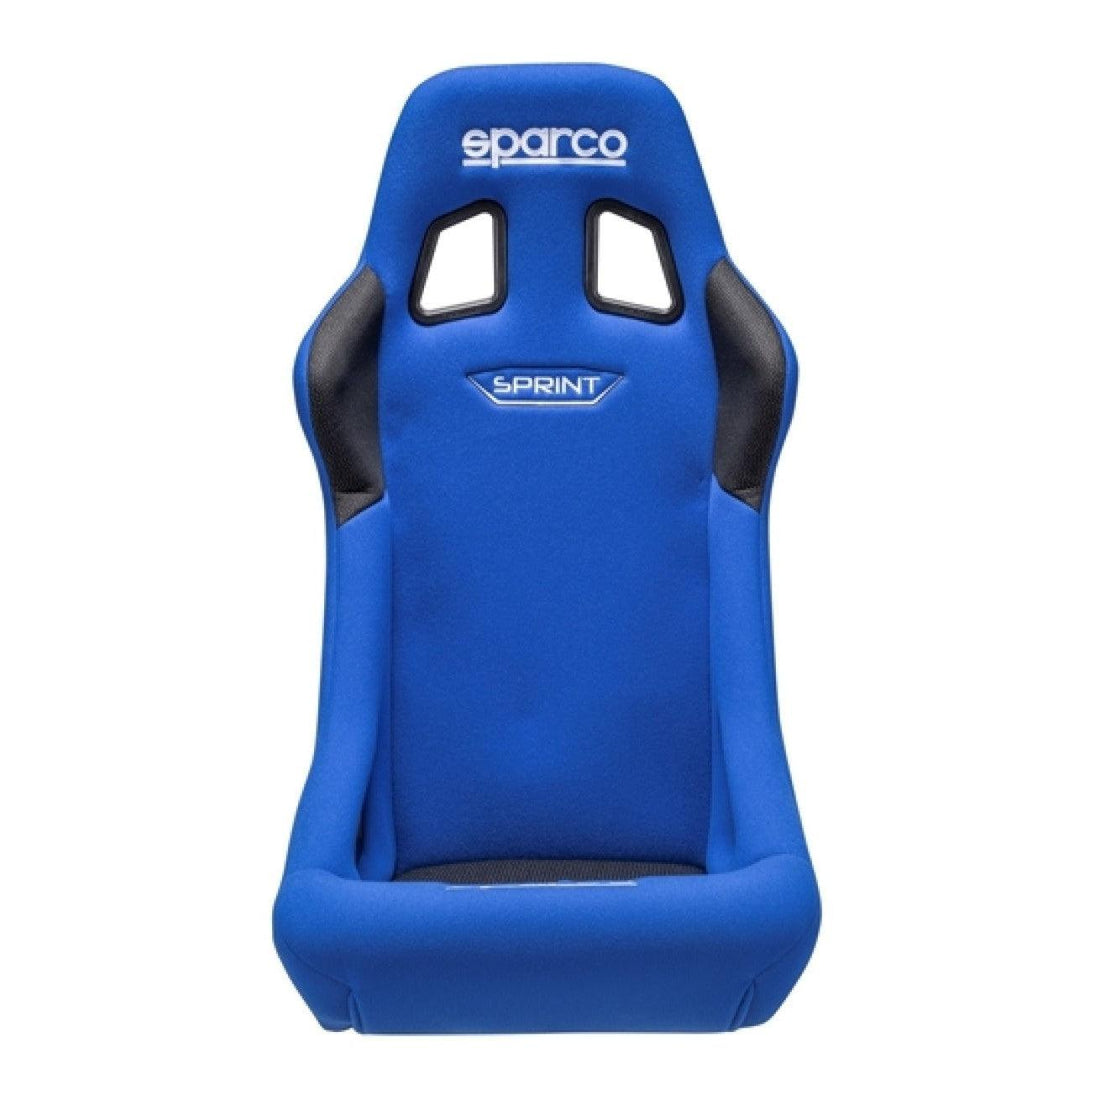 Sparco Seat Sprint 2019 Blue - Saikospeed